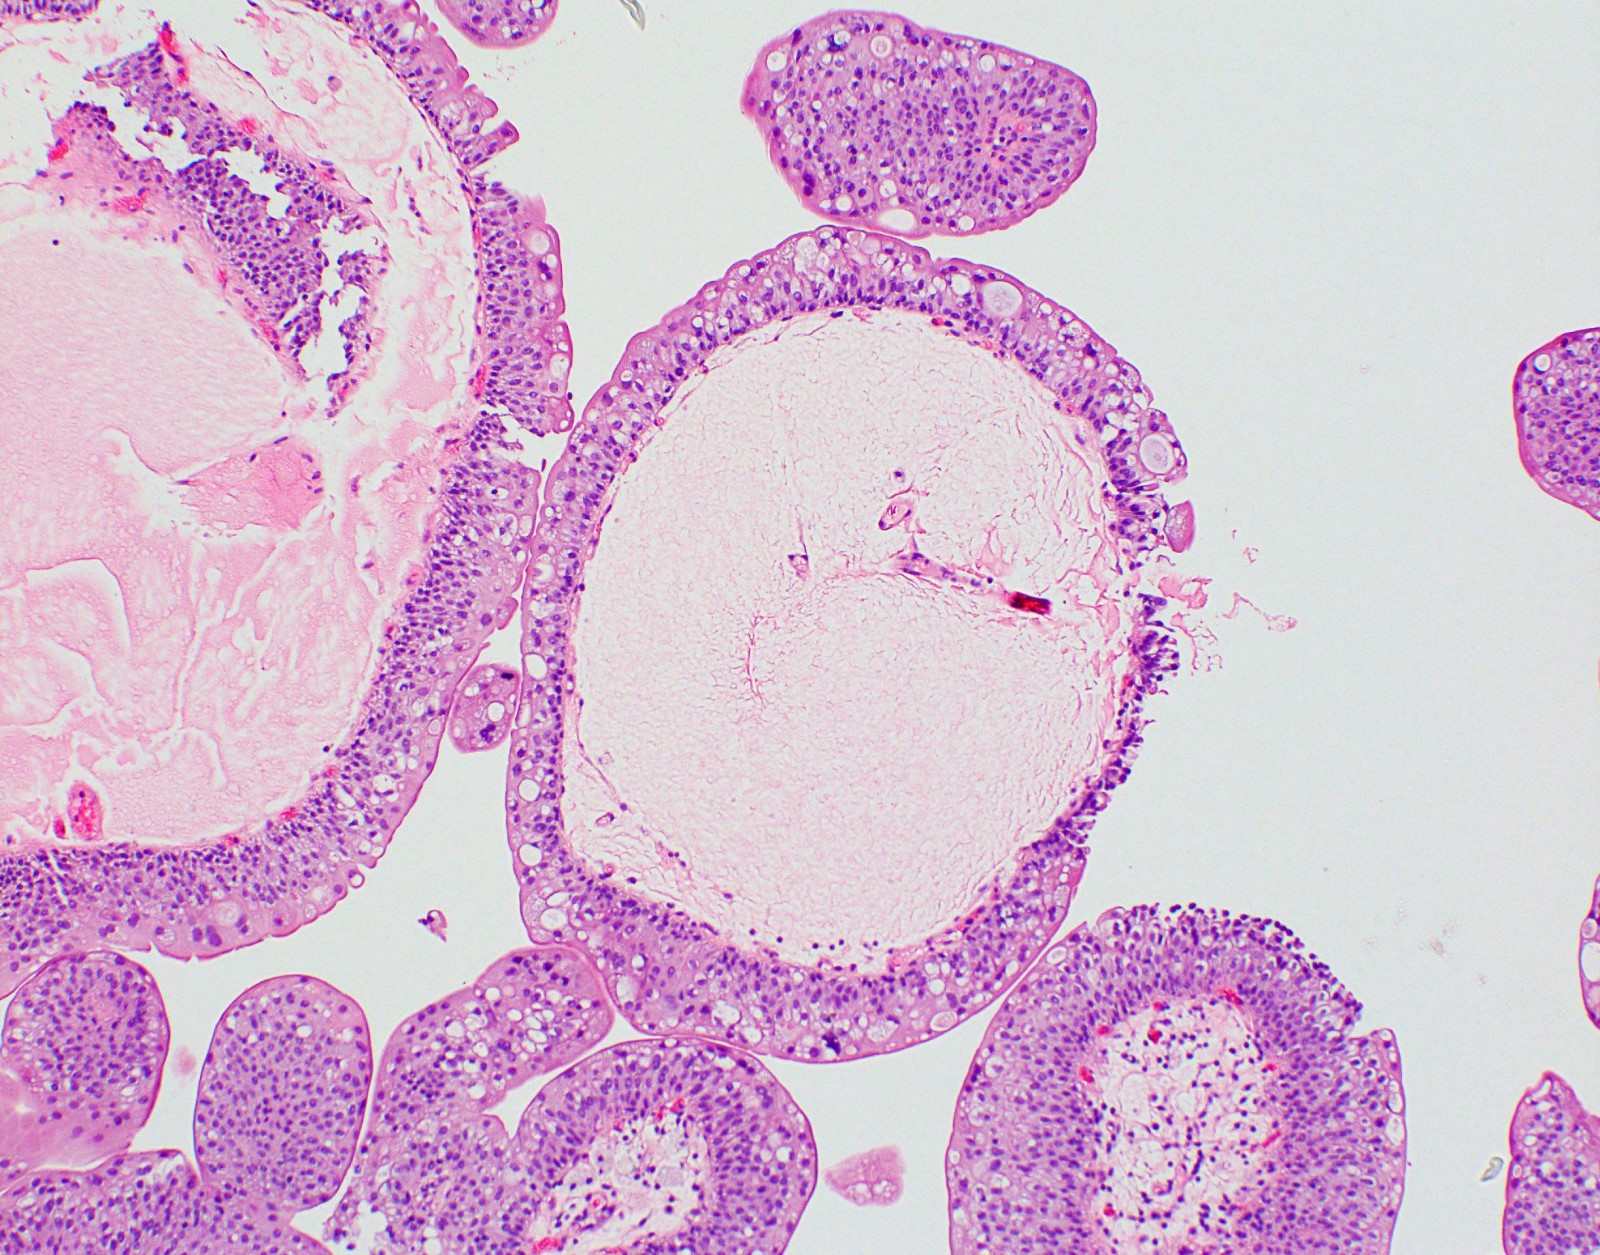 exophytic papilloma bladder